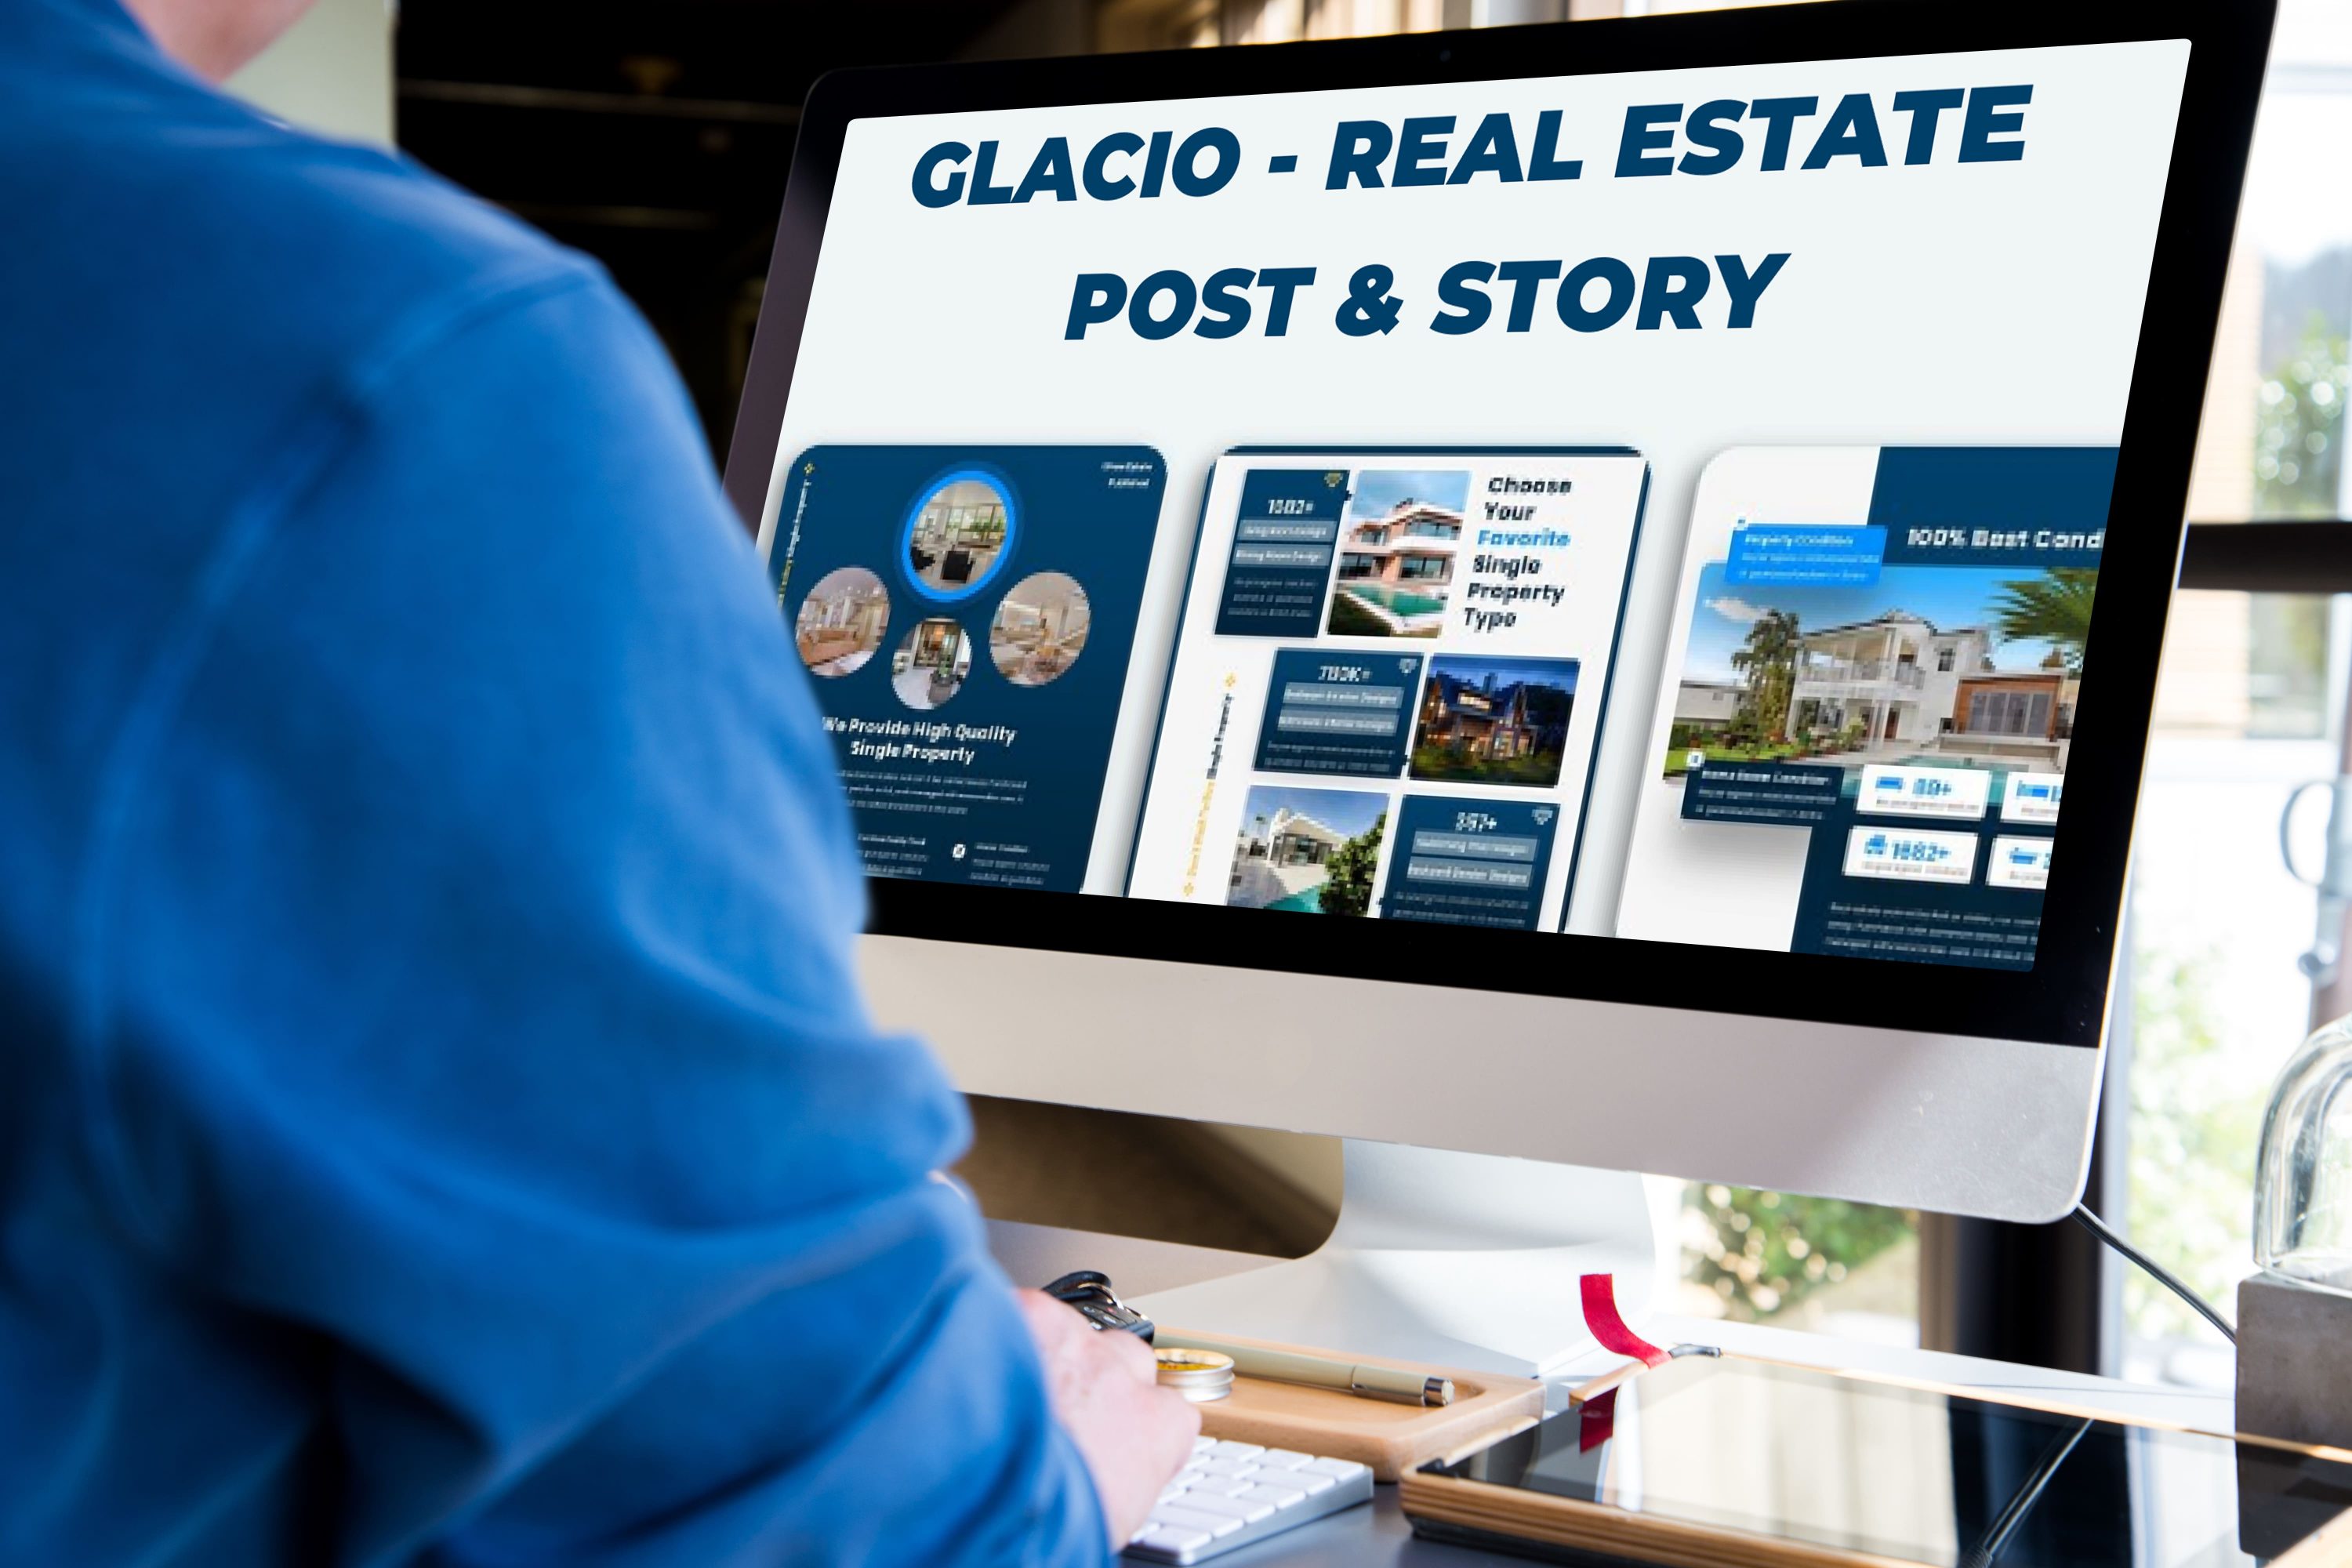 Desktop option of the Glacio - Real Estate Post & Story.